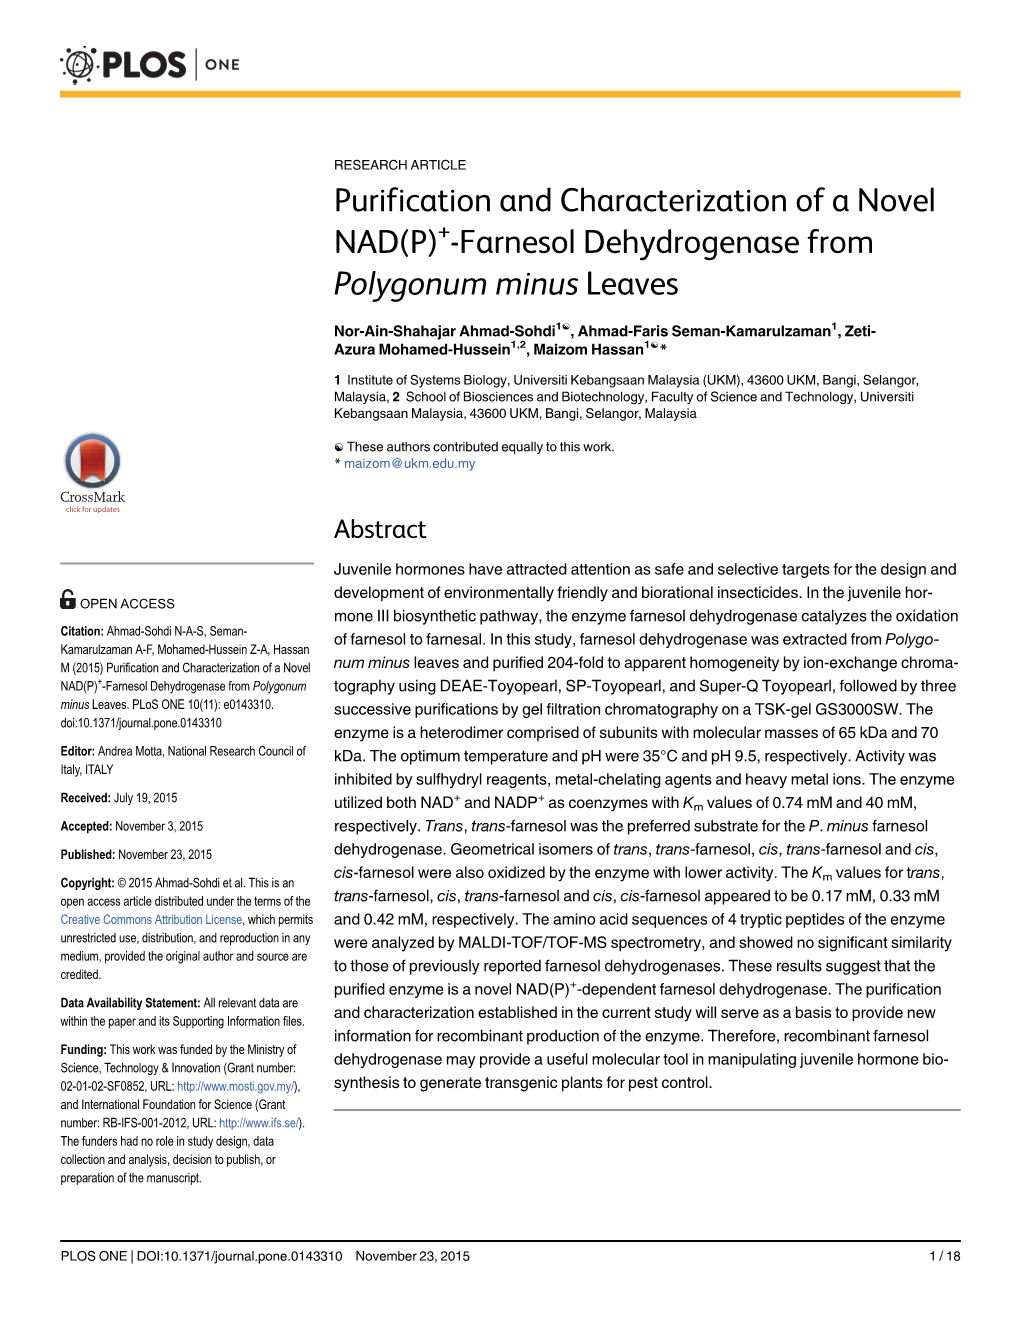 Purification and Characterization of a Novel NAD (P)+-Farnesol